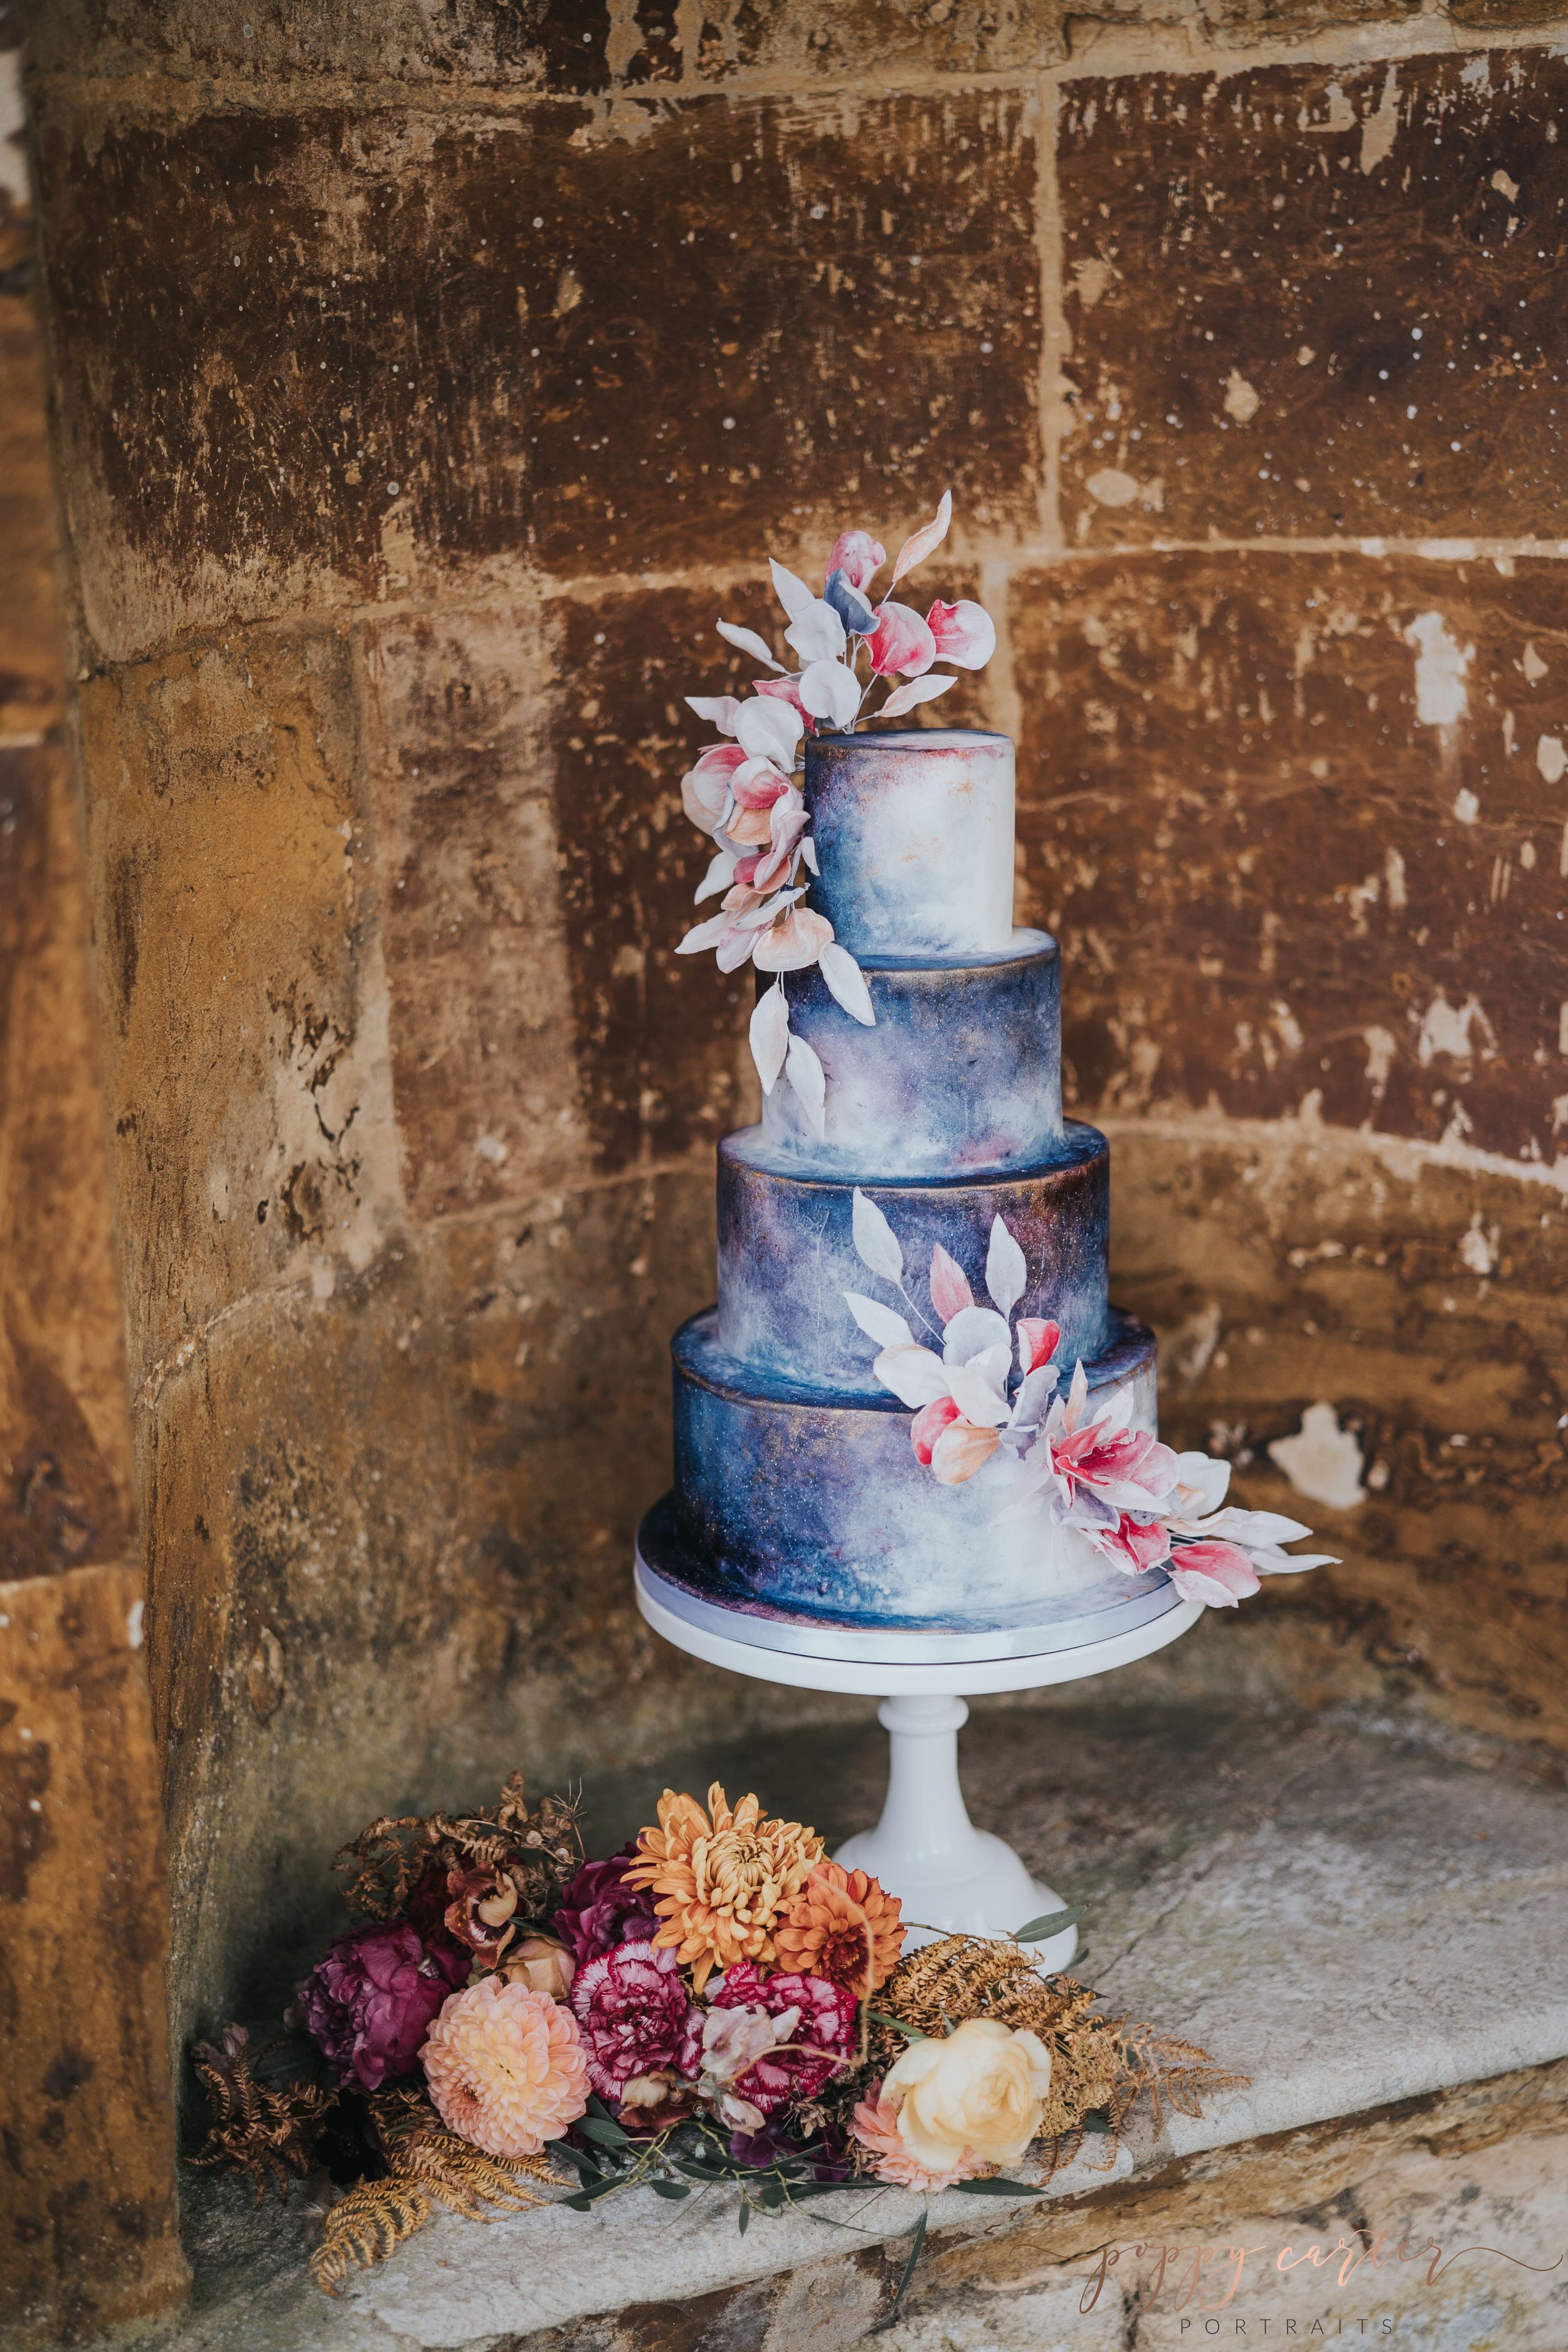 Stunning blue celestial wedding cake